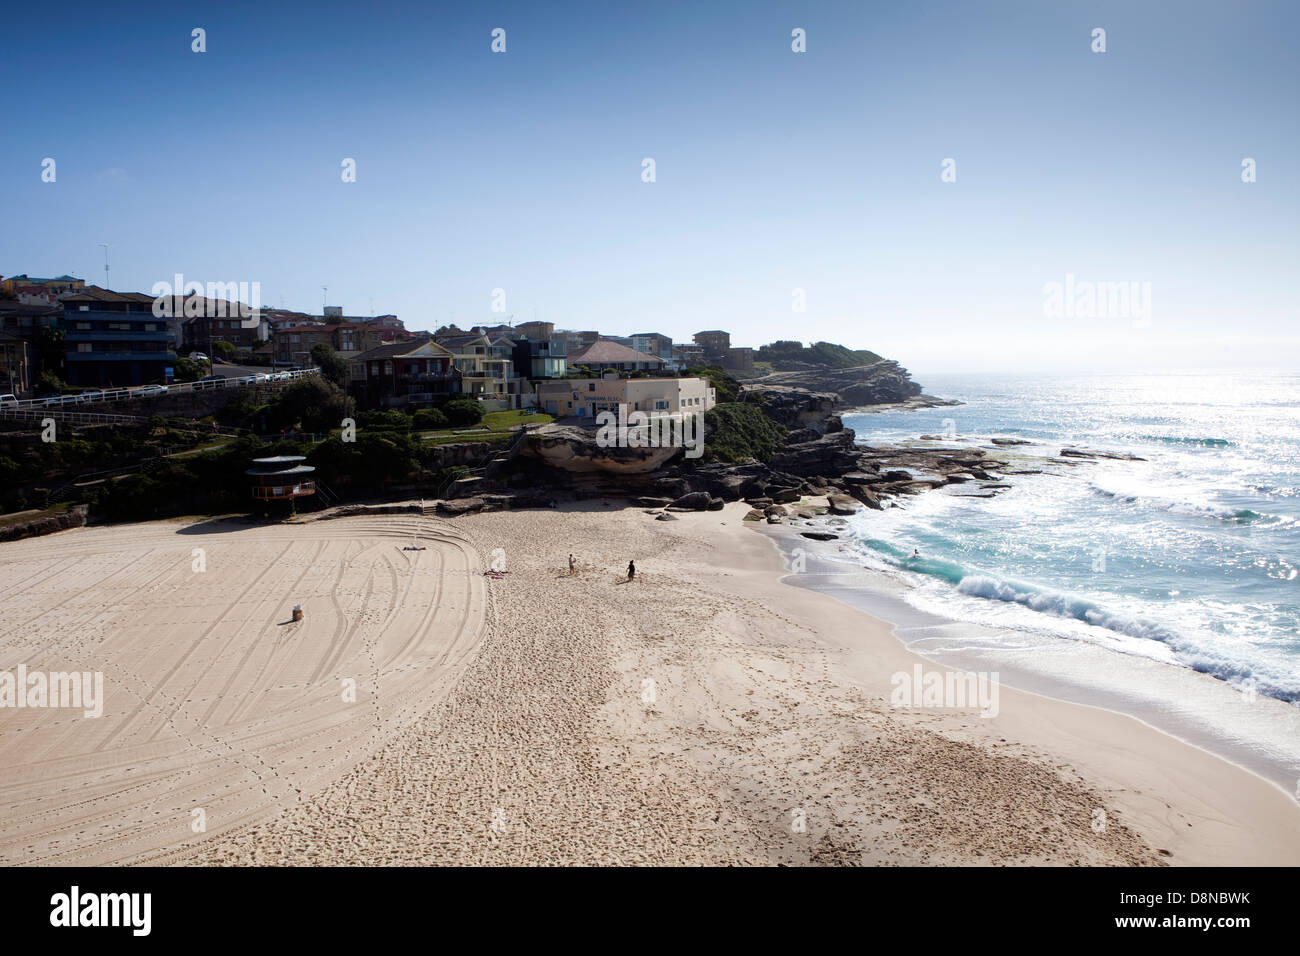 A view of Tamarama Beach in Sydney, Australia Stock Photo